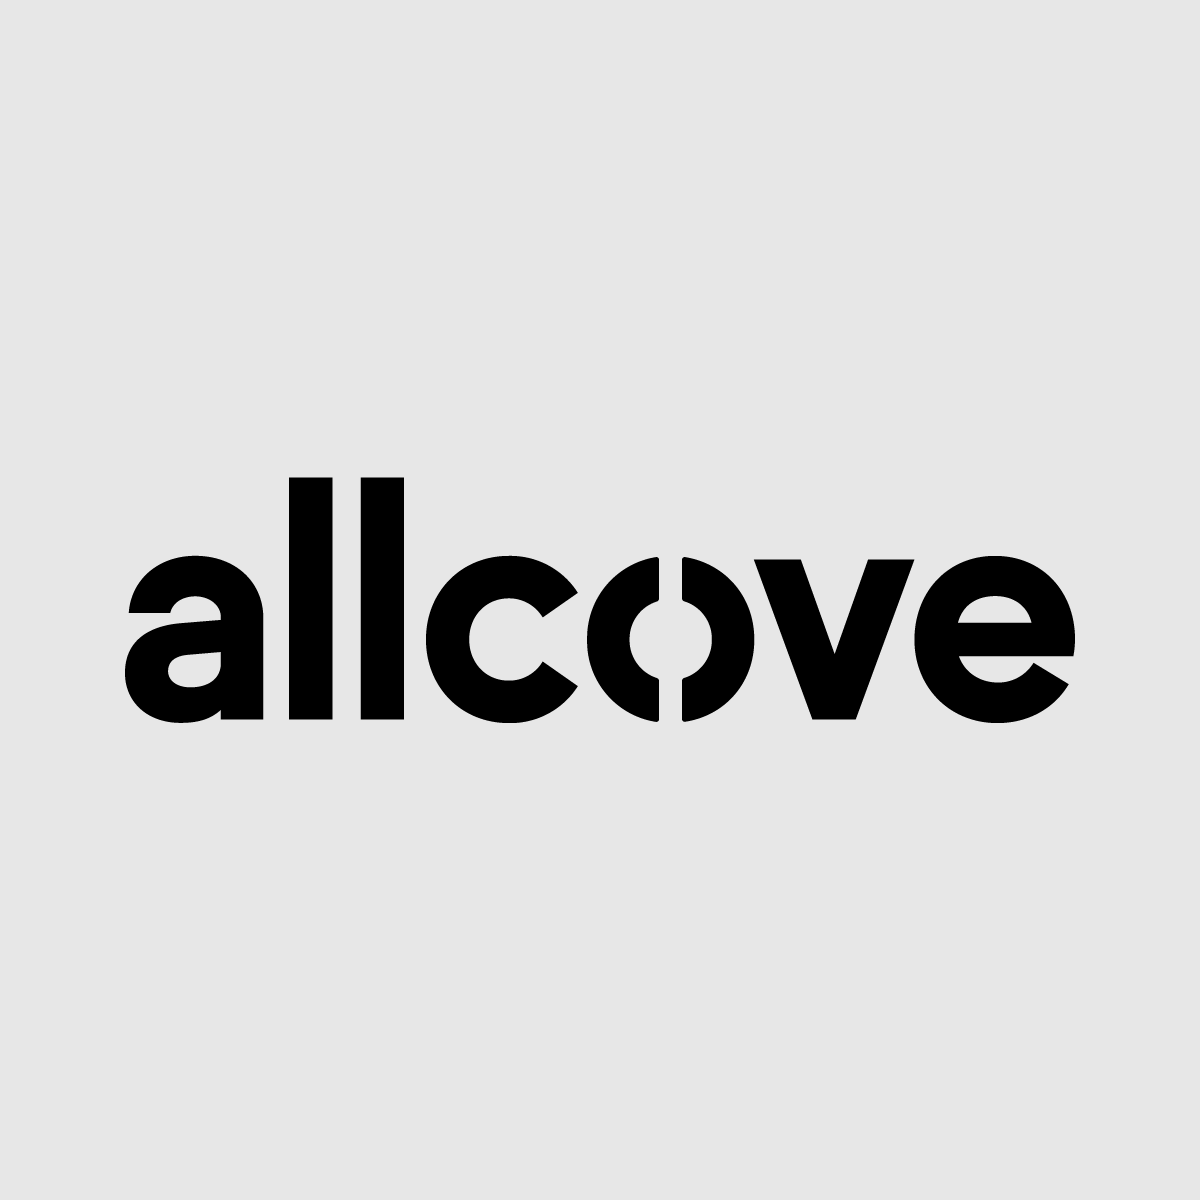 allcove-grey-box-logo.png